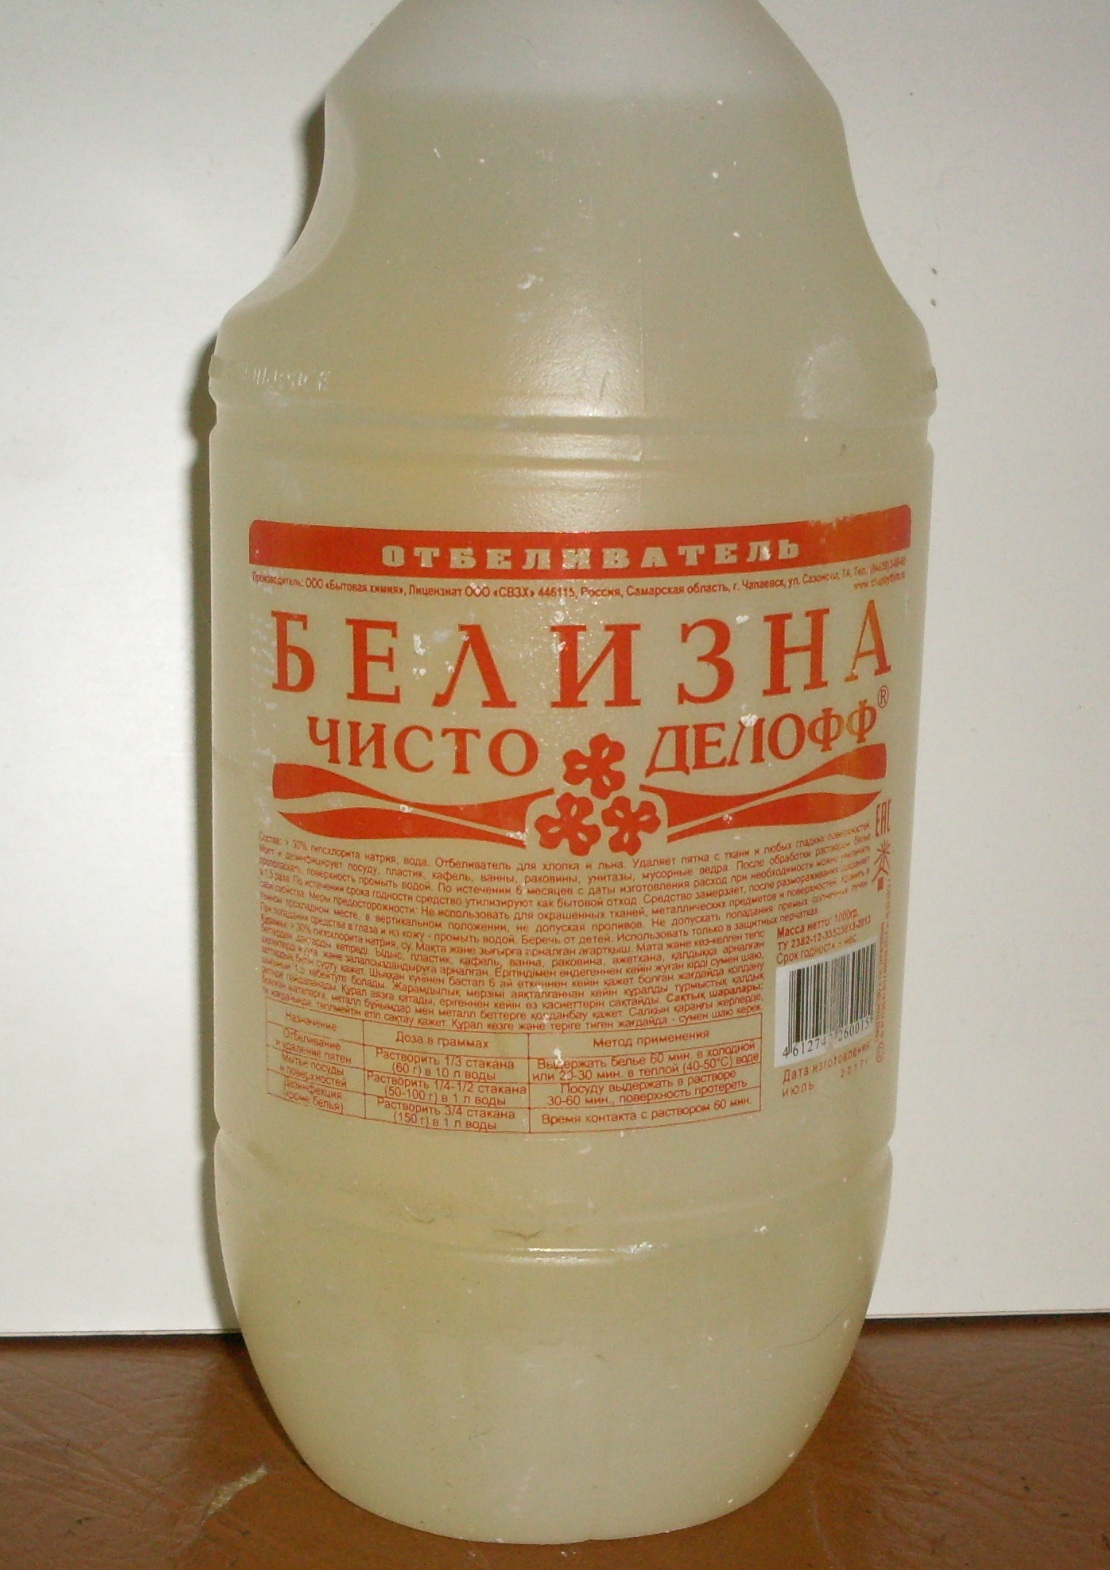        ''''. Determination of sodium hypochlorite in bleach ''Belizna''